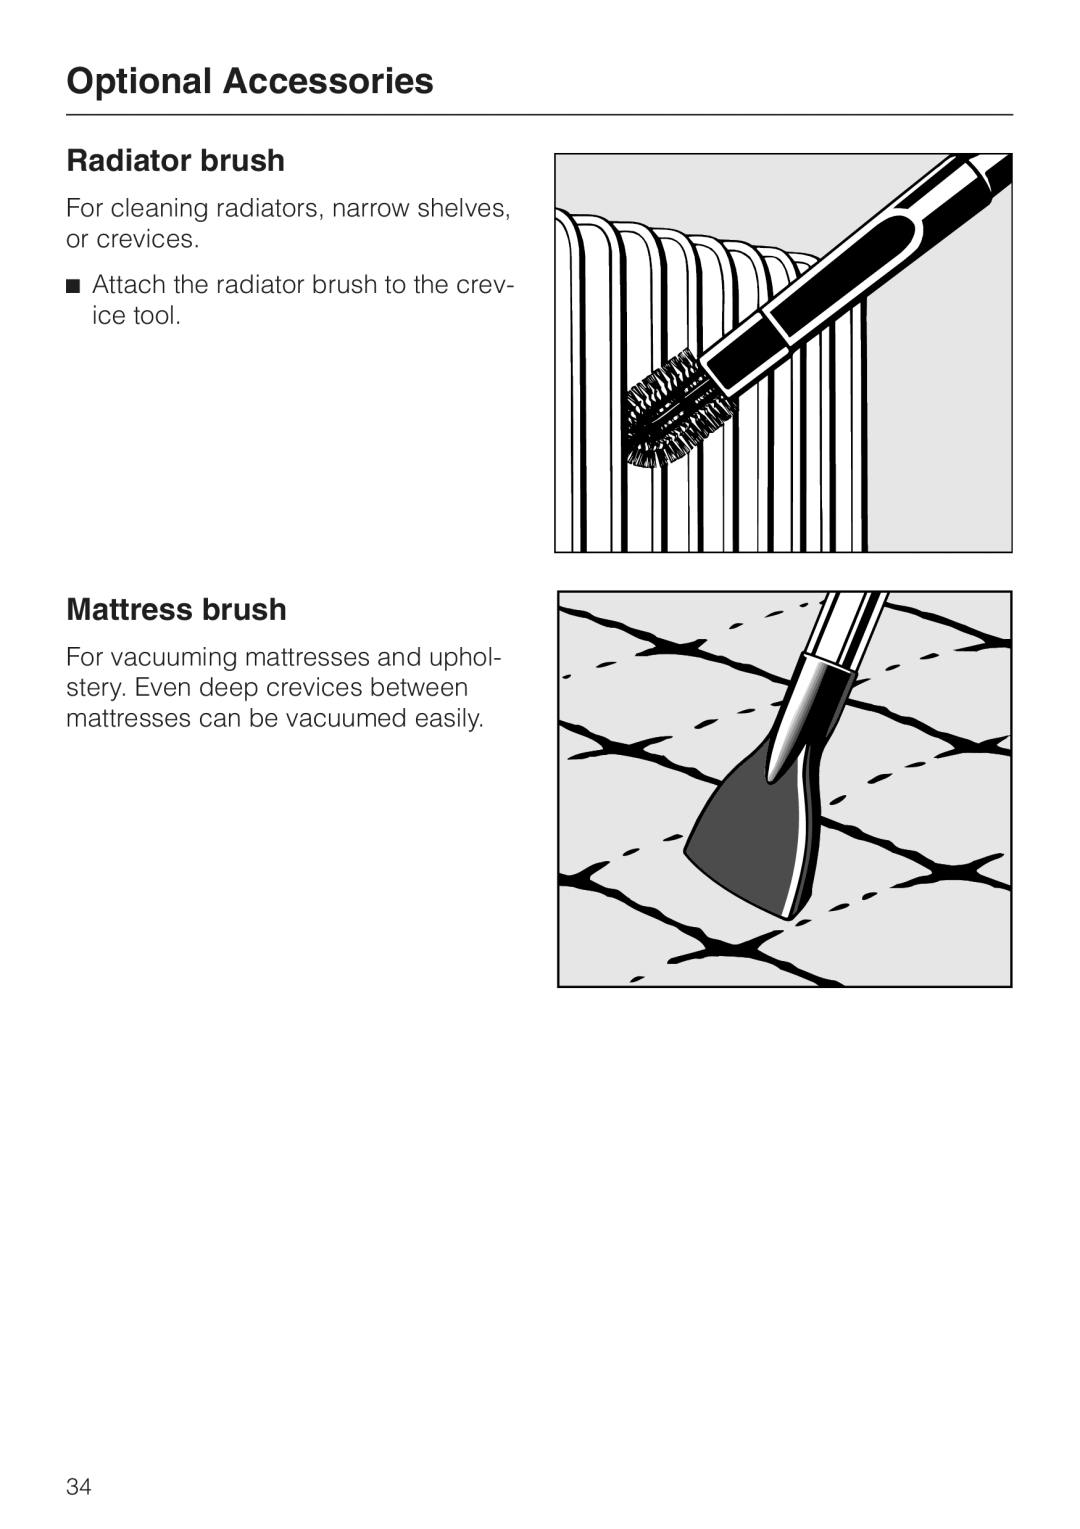 Miele S157 manual Radiator brush, Mattress brush, Optional Accessories 